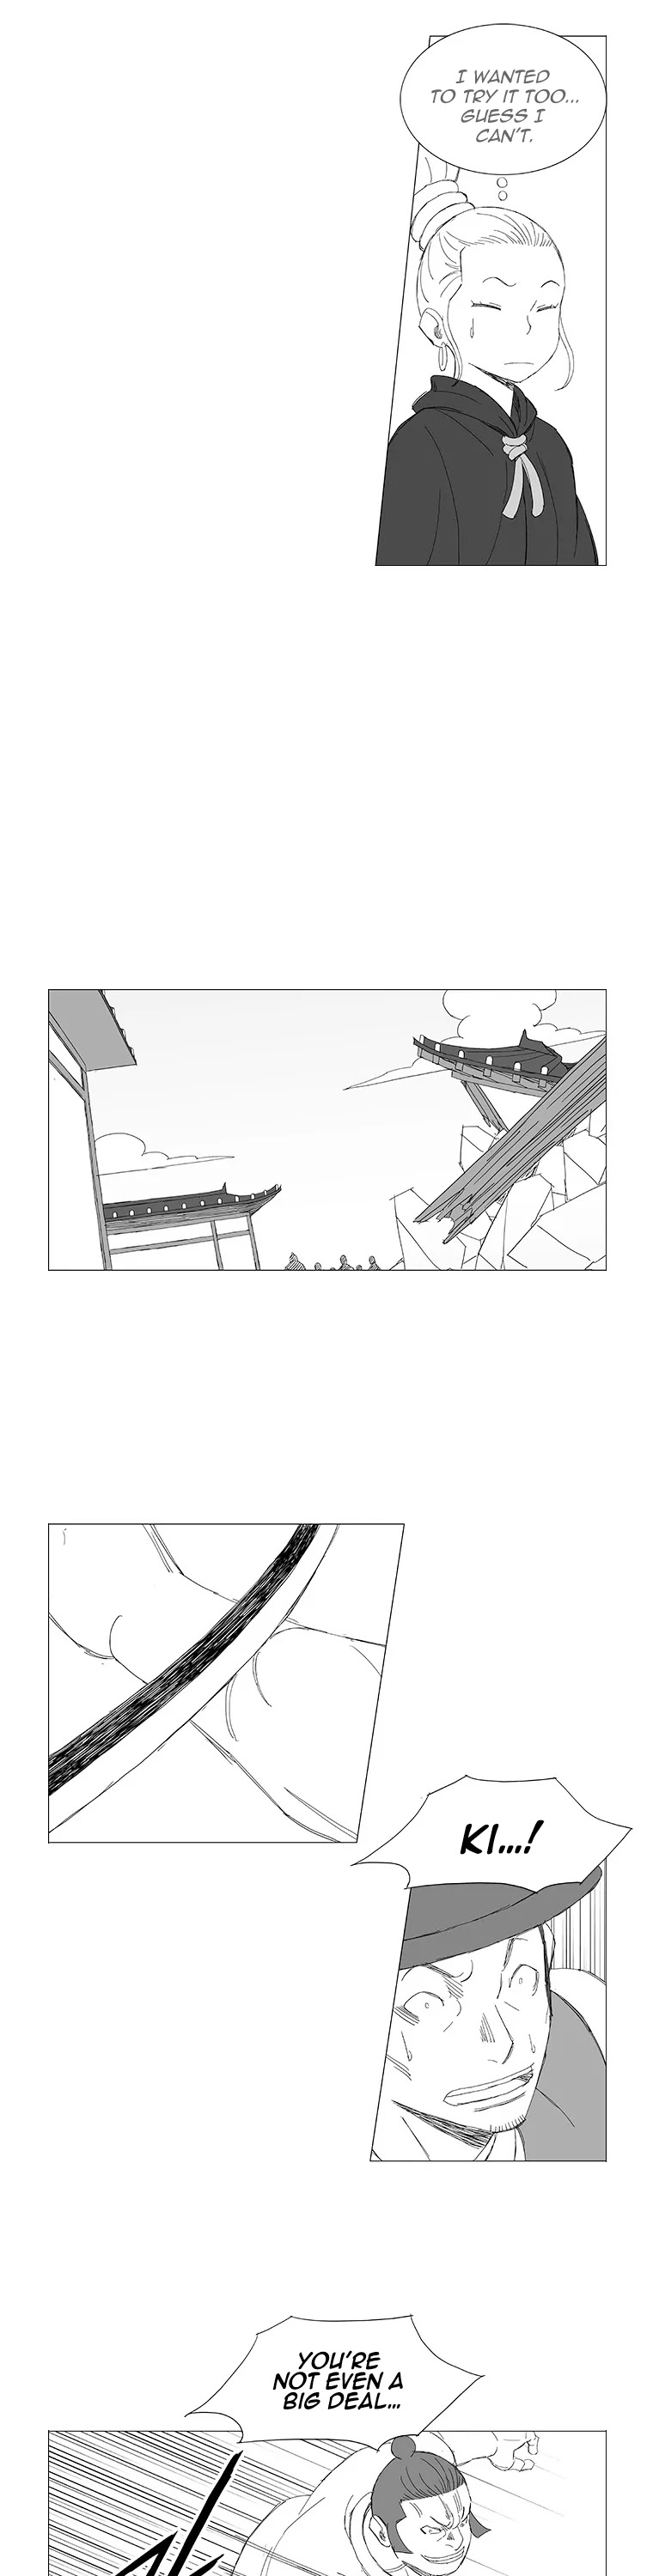 Wind Sword - Page 3